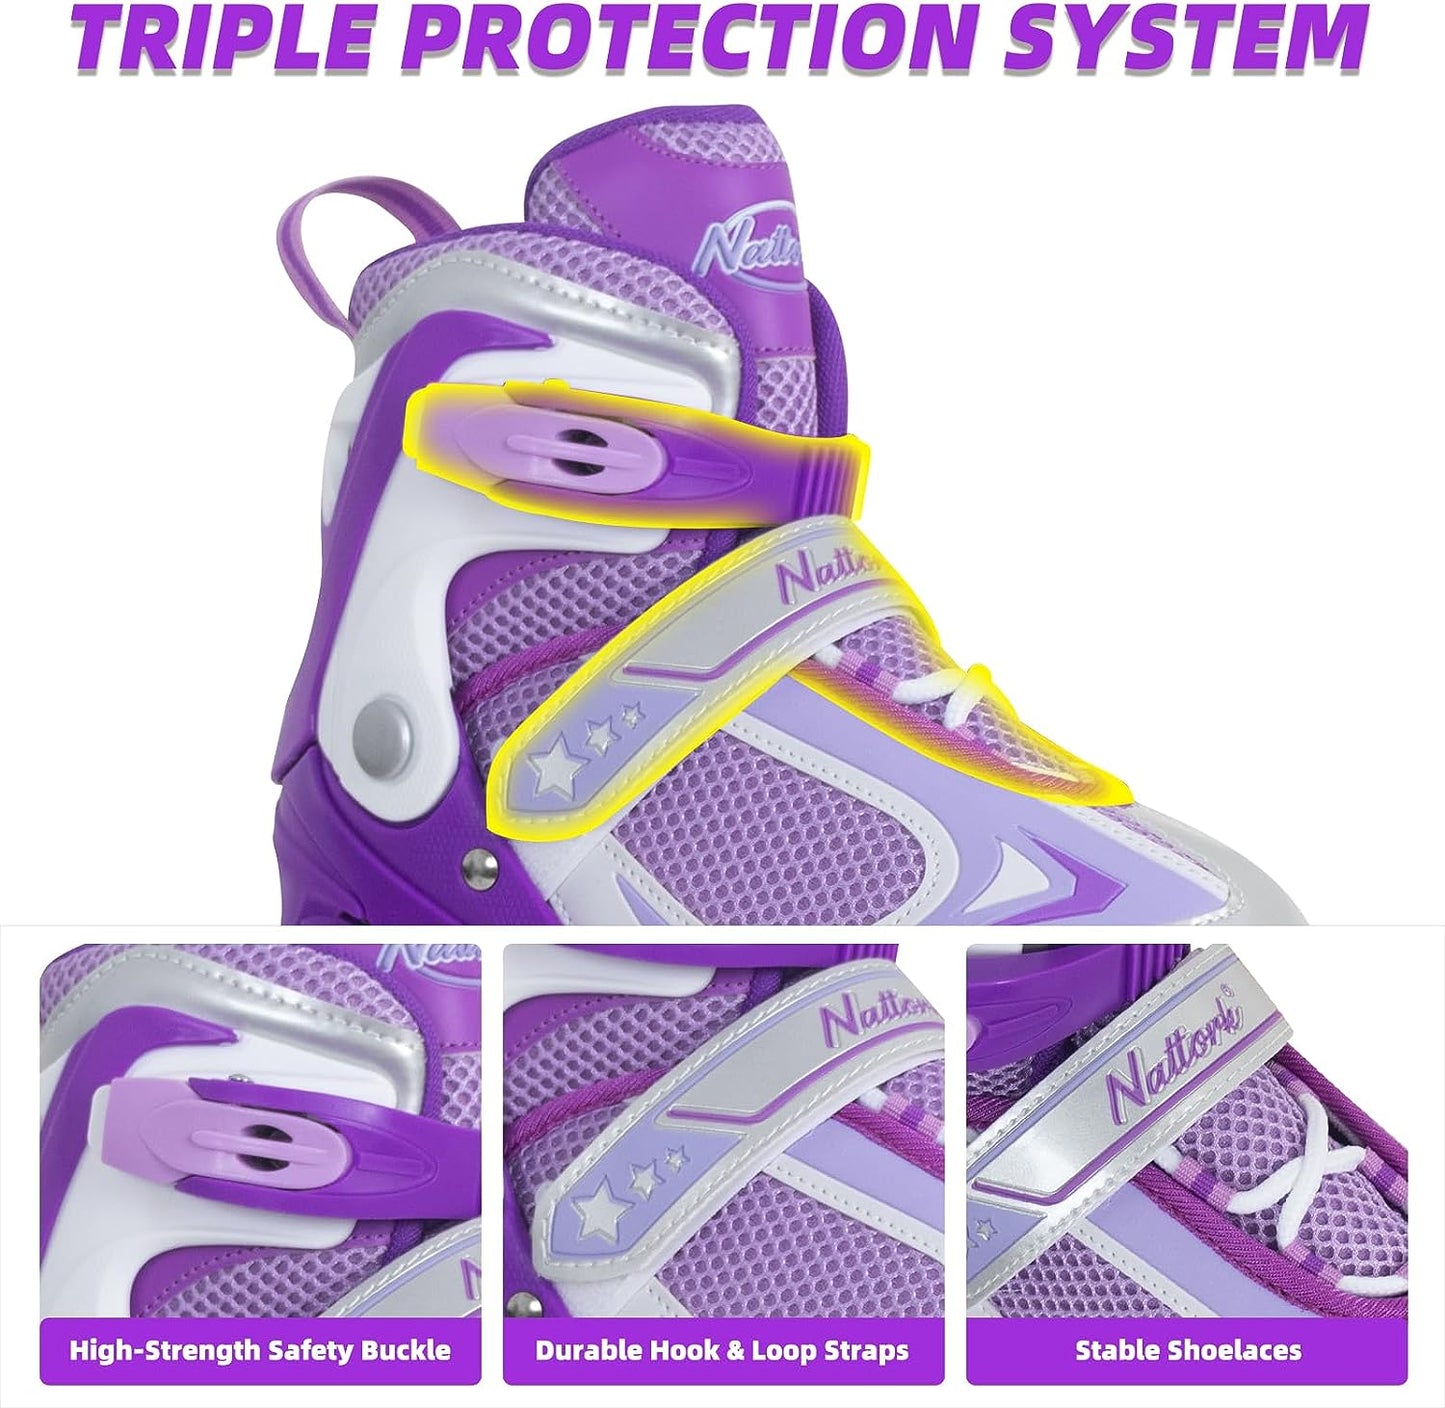 Nattork Adjustable Inline Skates for Kids Purple